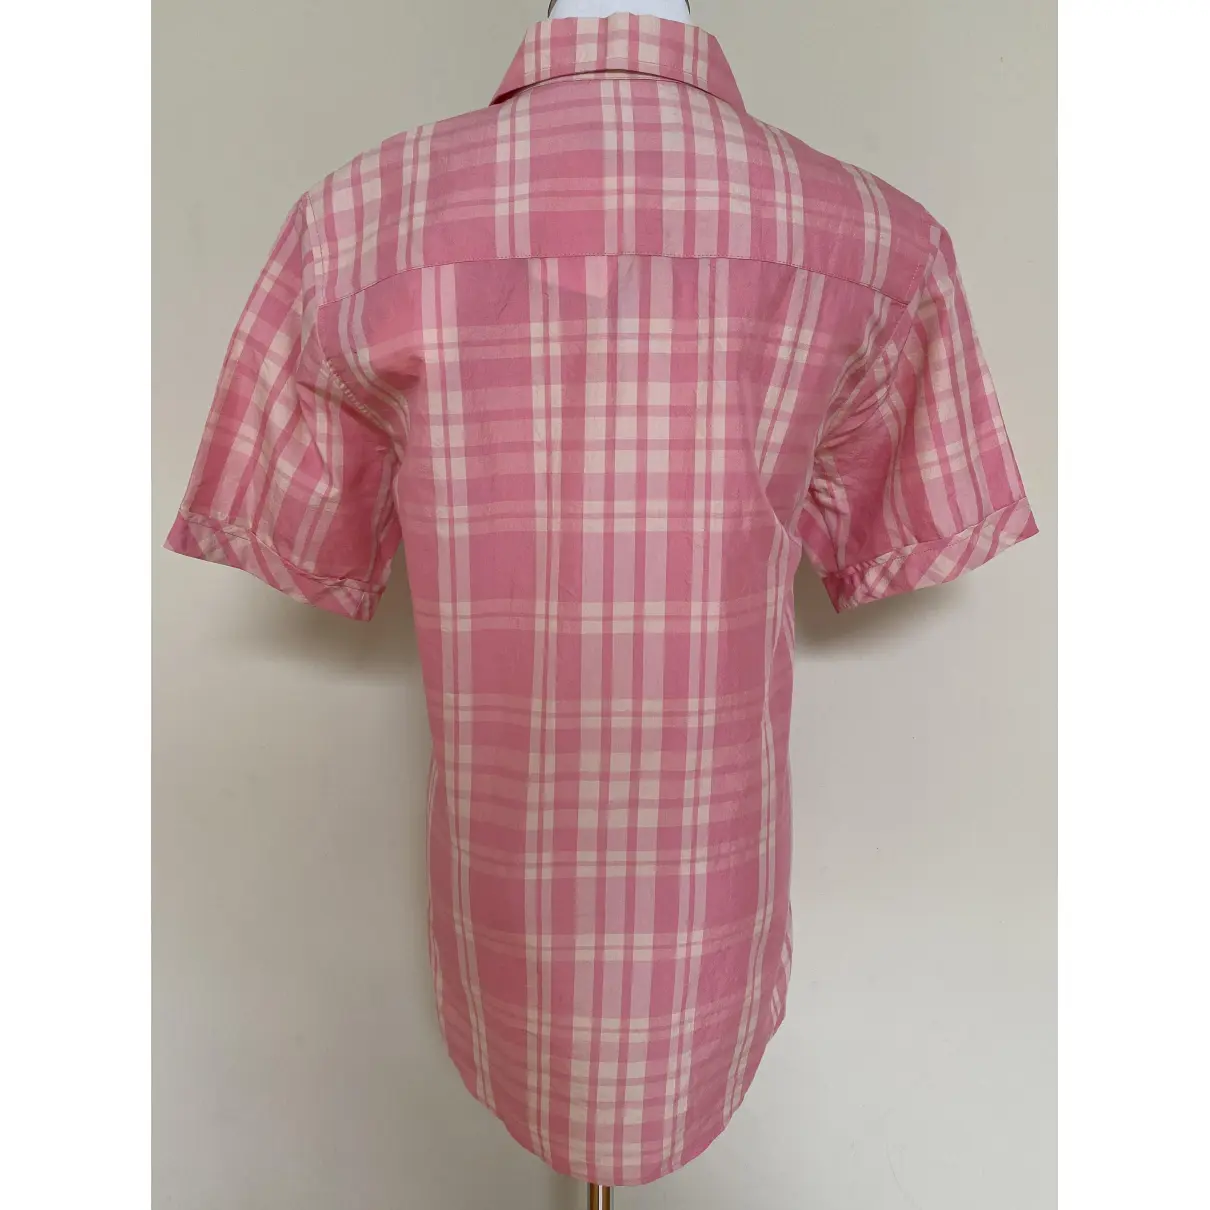 Buy Isabel Marant Pink Cotton Top online